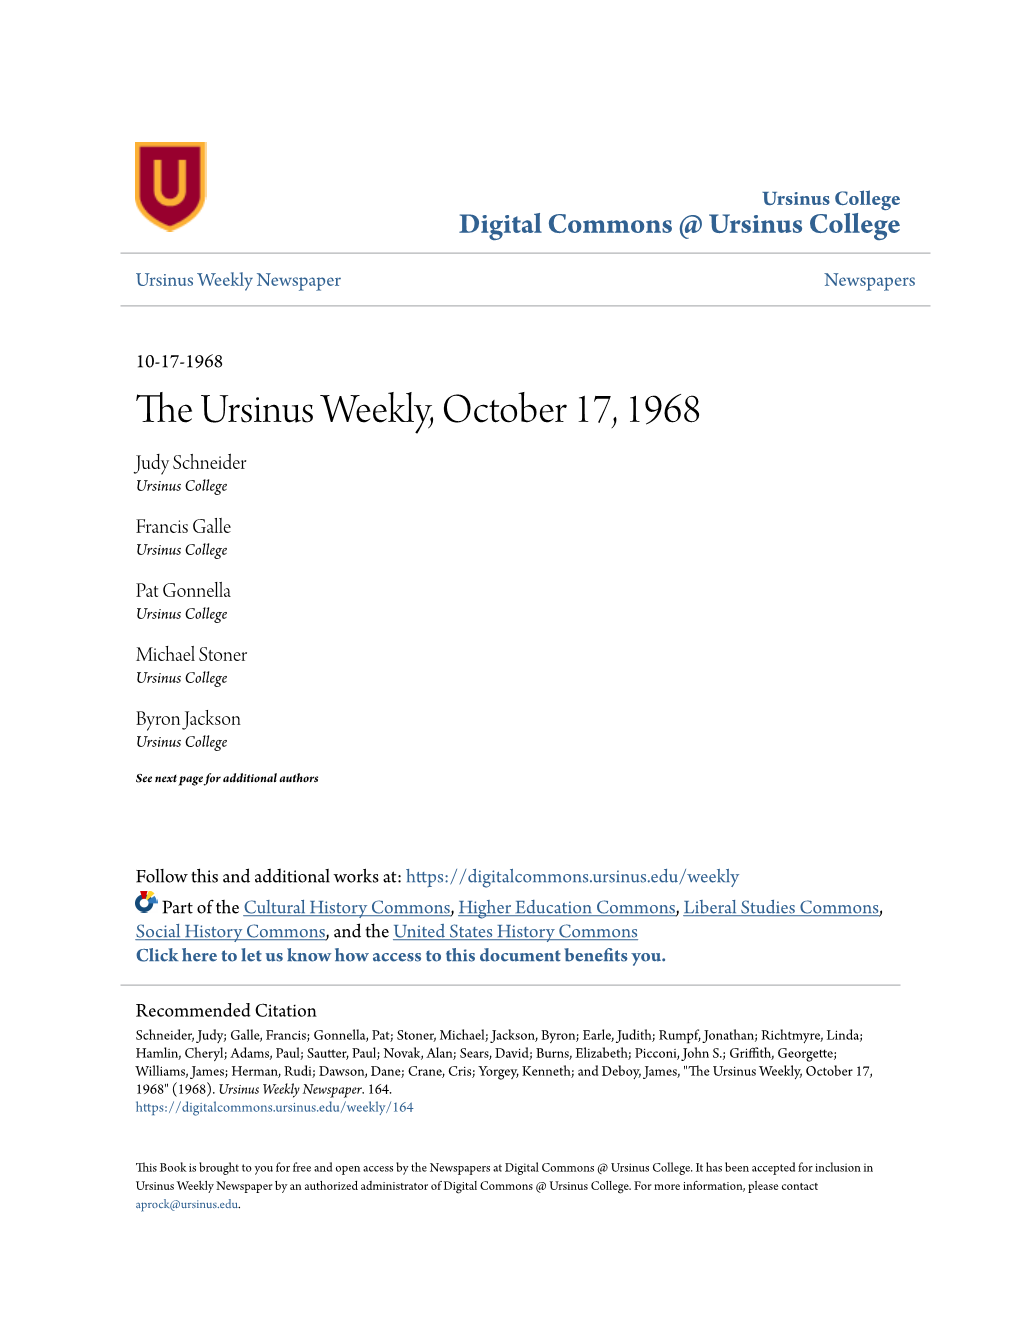 The Ursinus Weekly, October 17, 1968